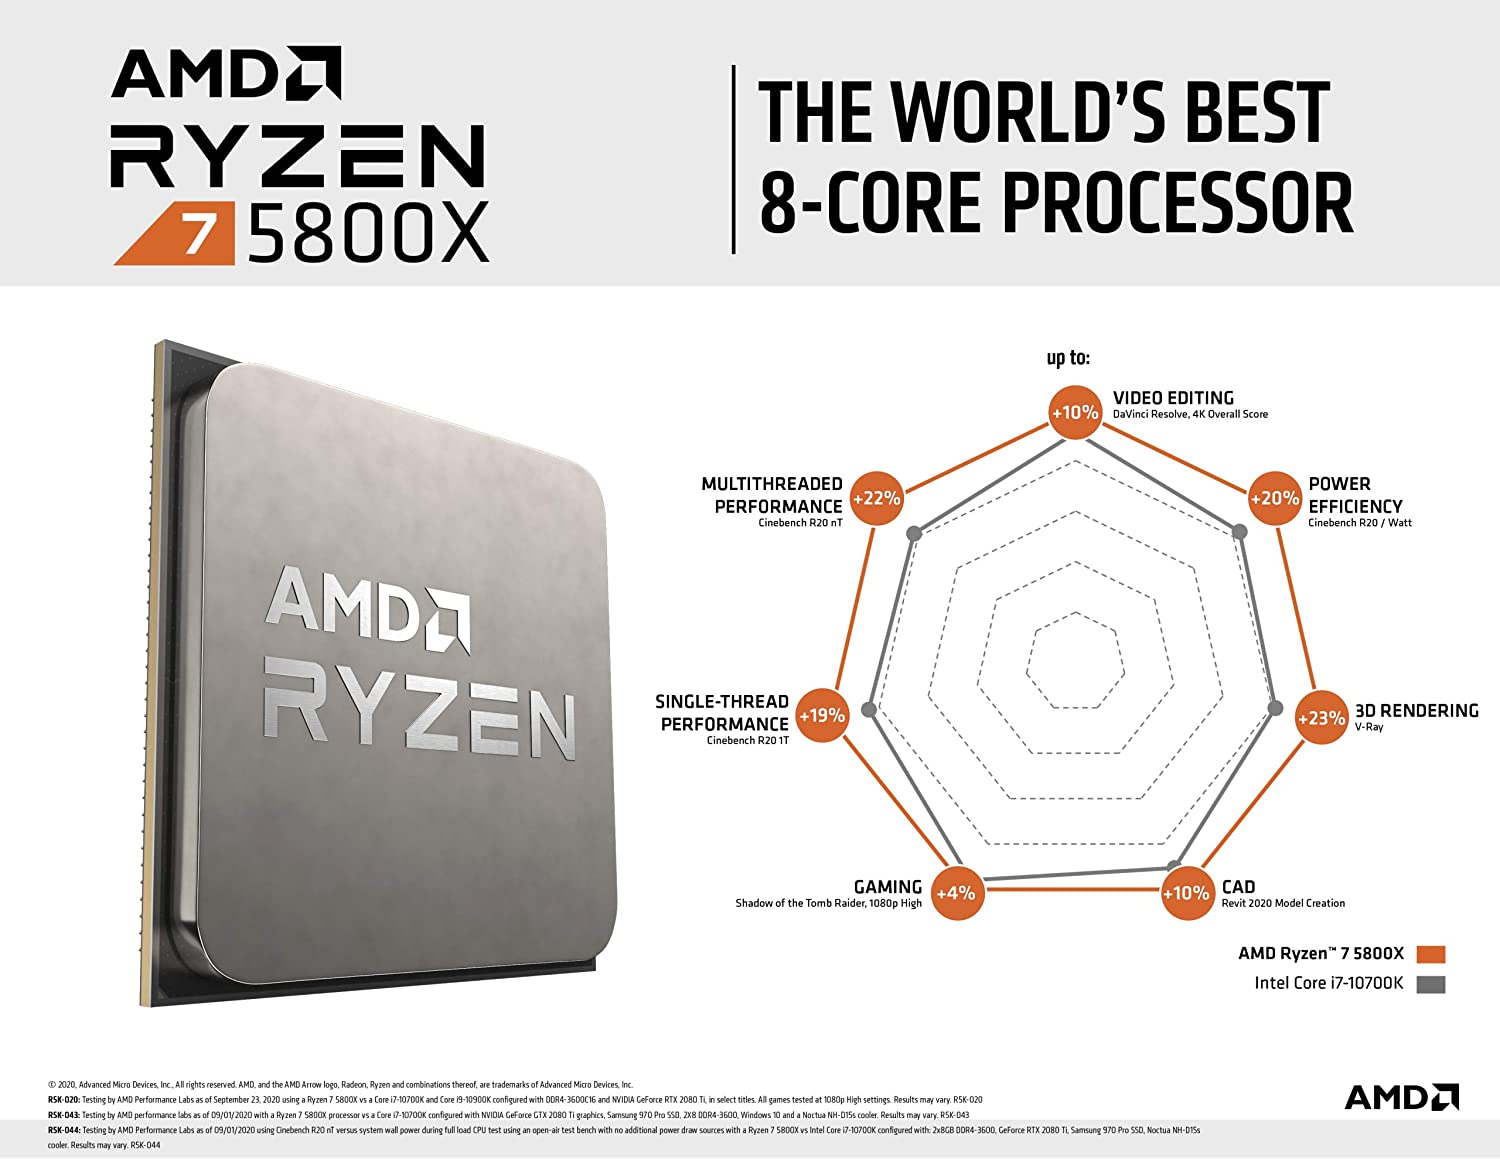 AMD Ryzen 7 5800X 8-core, 16-thread unlocked desktop processor without cooler